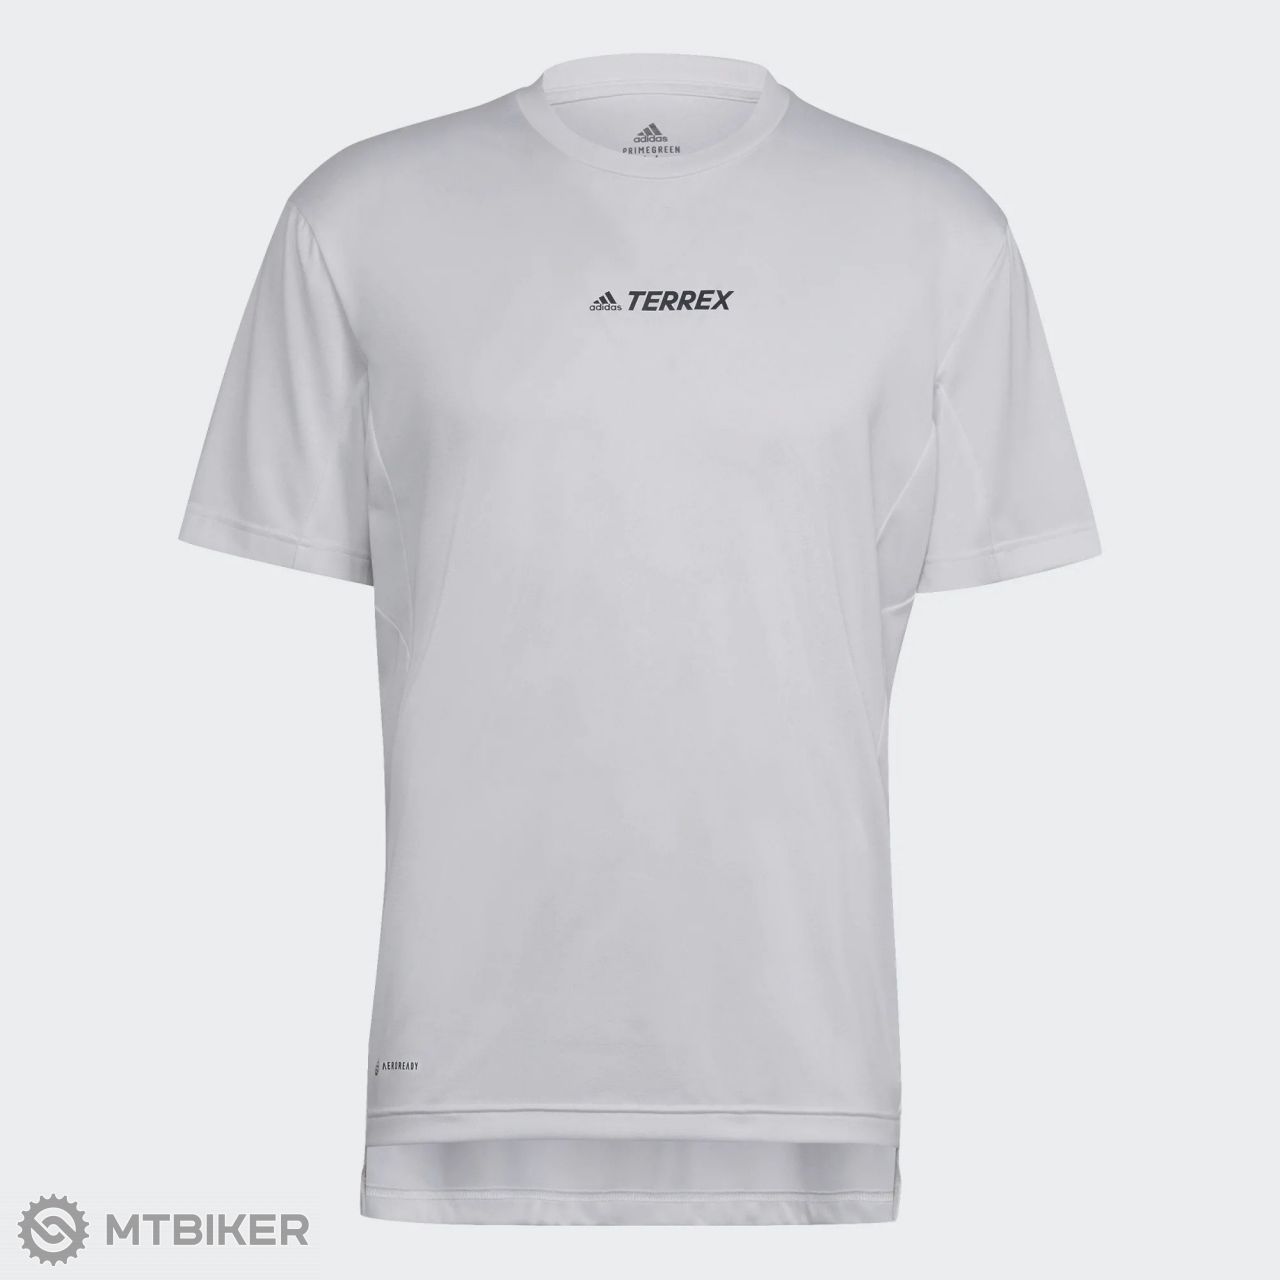 MULTI T-shirt, TERREX adidas white